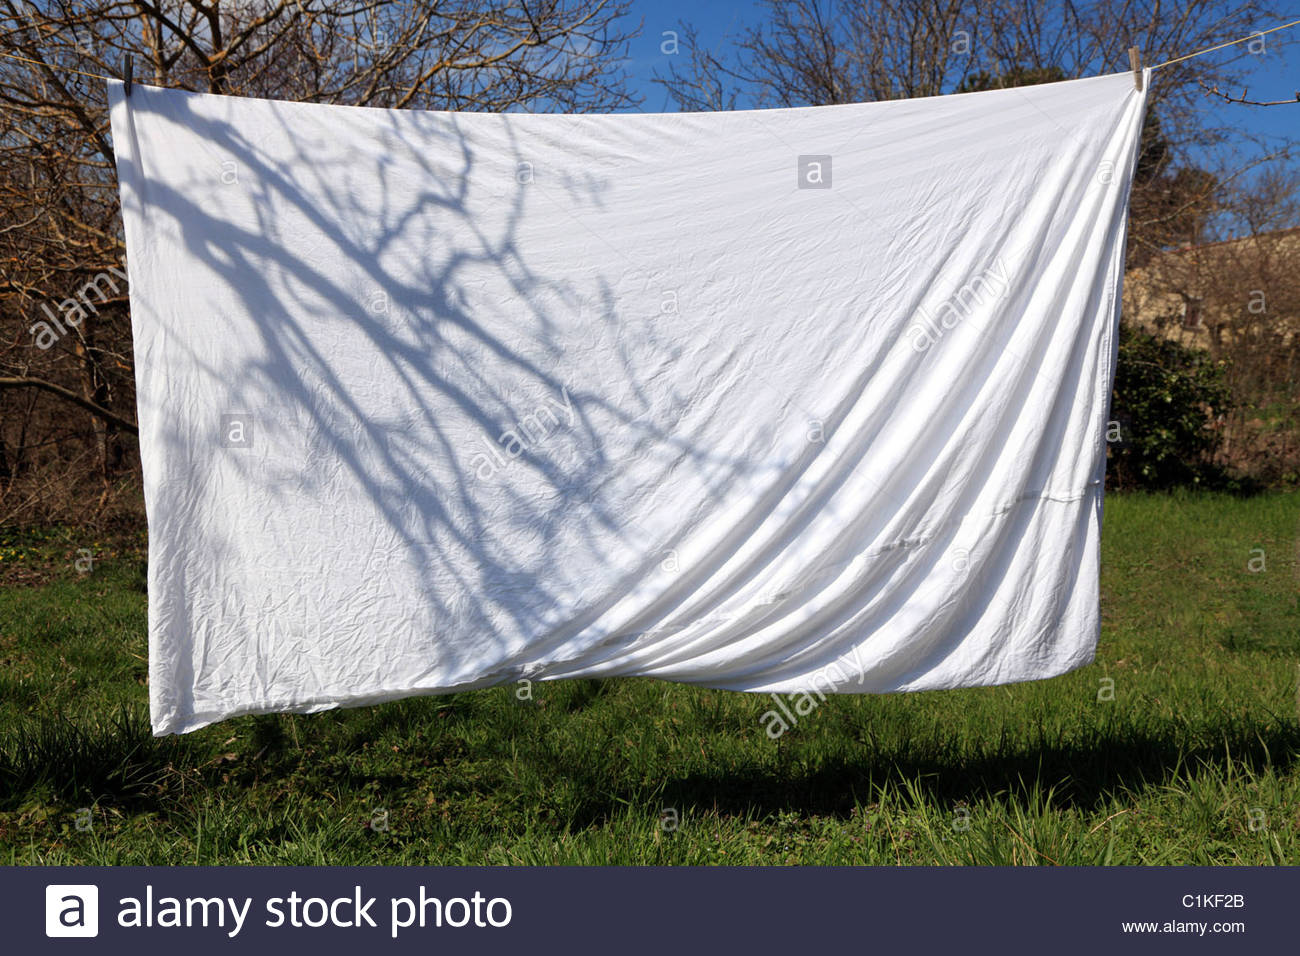 bed-sheet-drying-outside-on-washing-line-C1KF2B.jpg